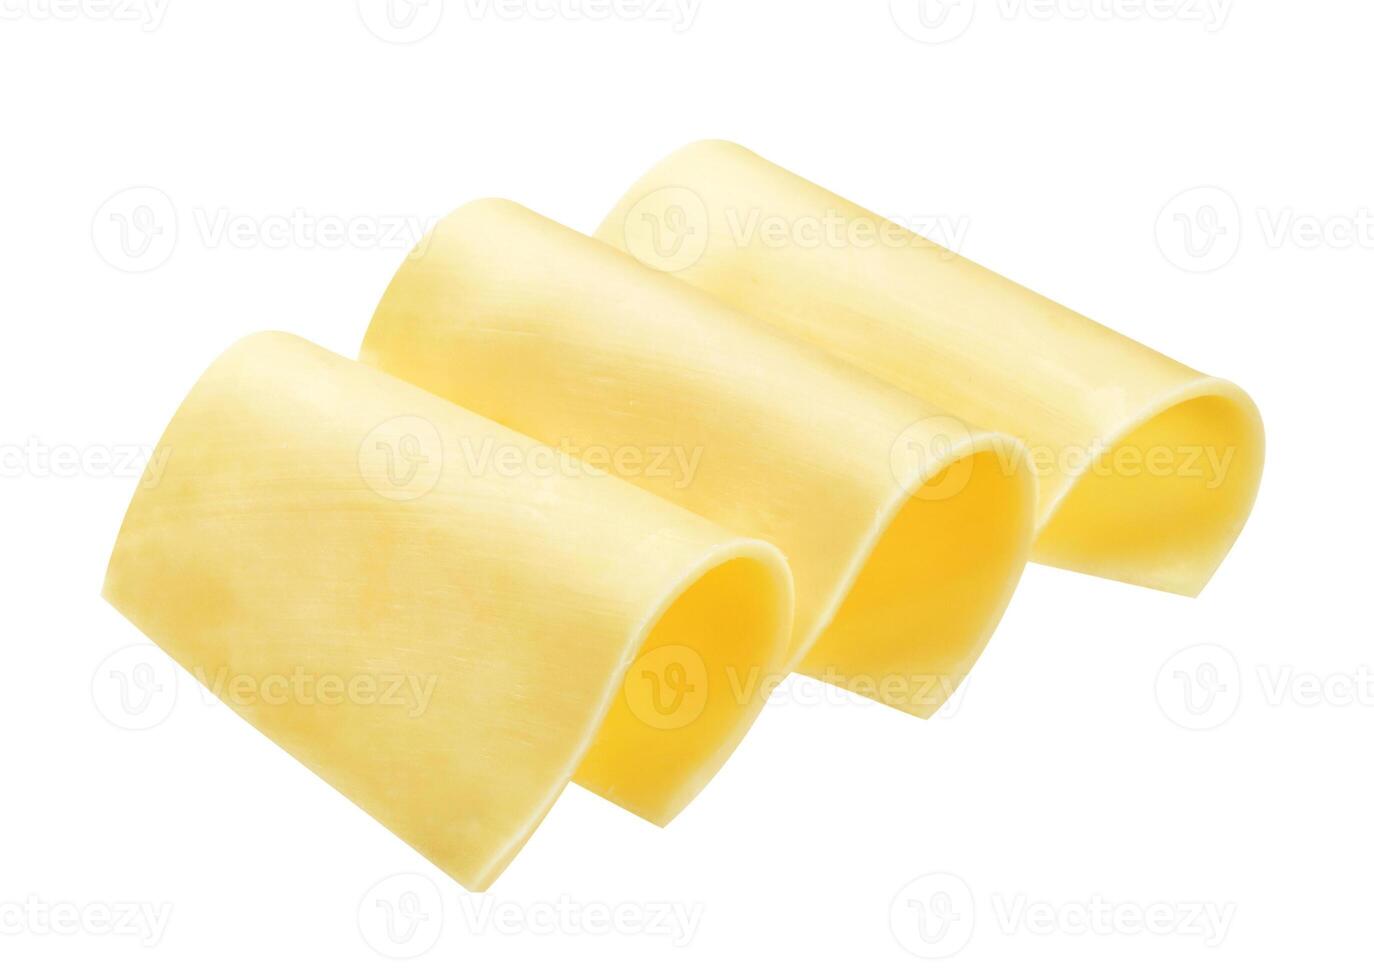 geïsoleerd kaas. kaas plak geïsoleerd Aan wit achtergrond met knipsel pad foto